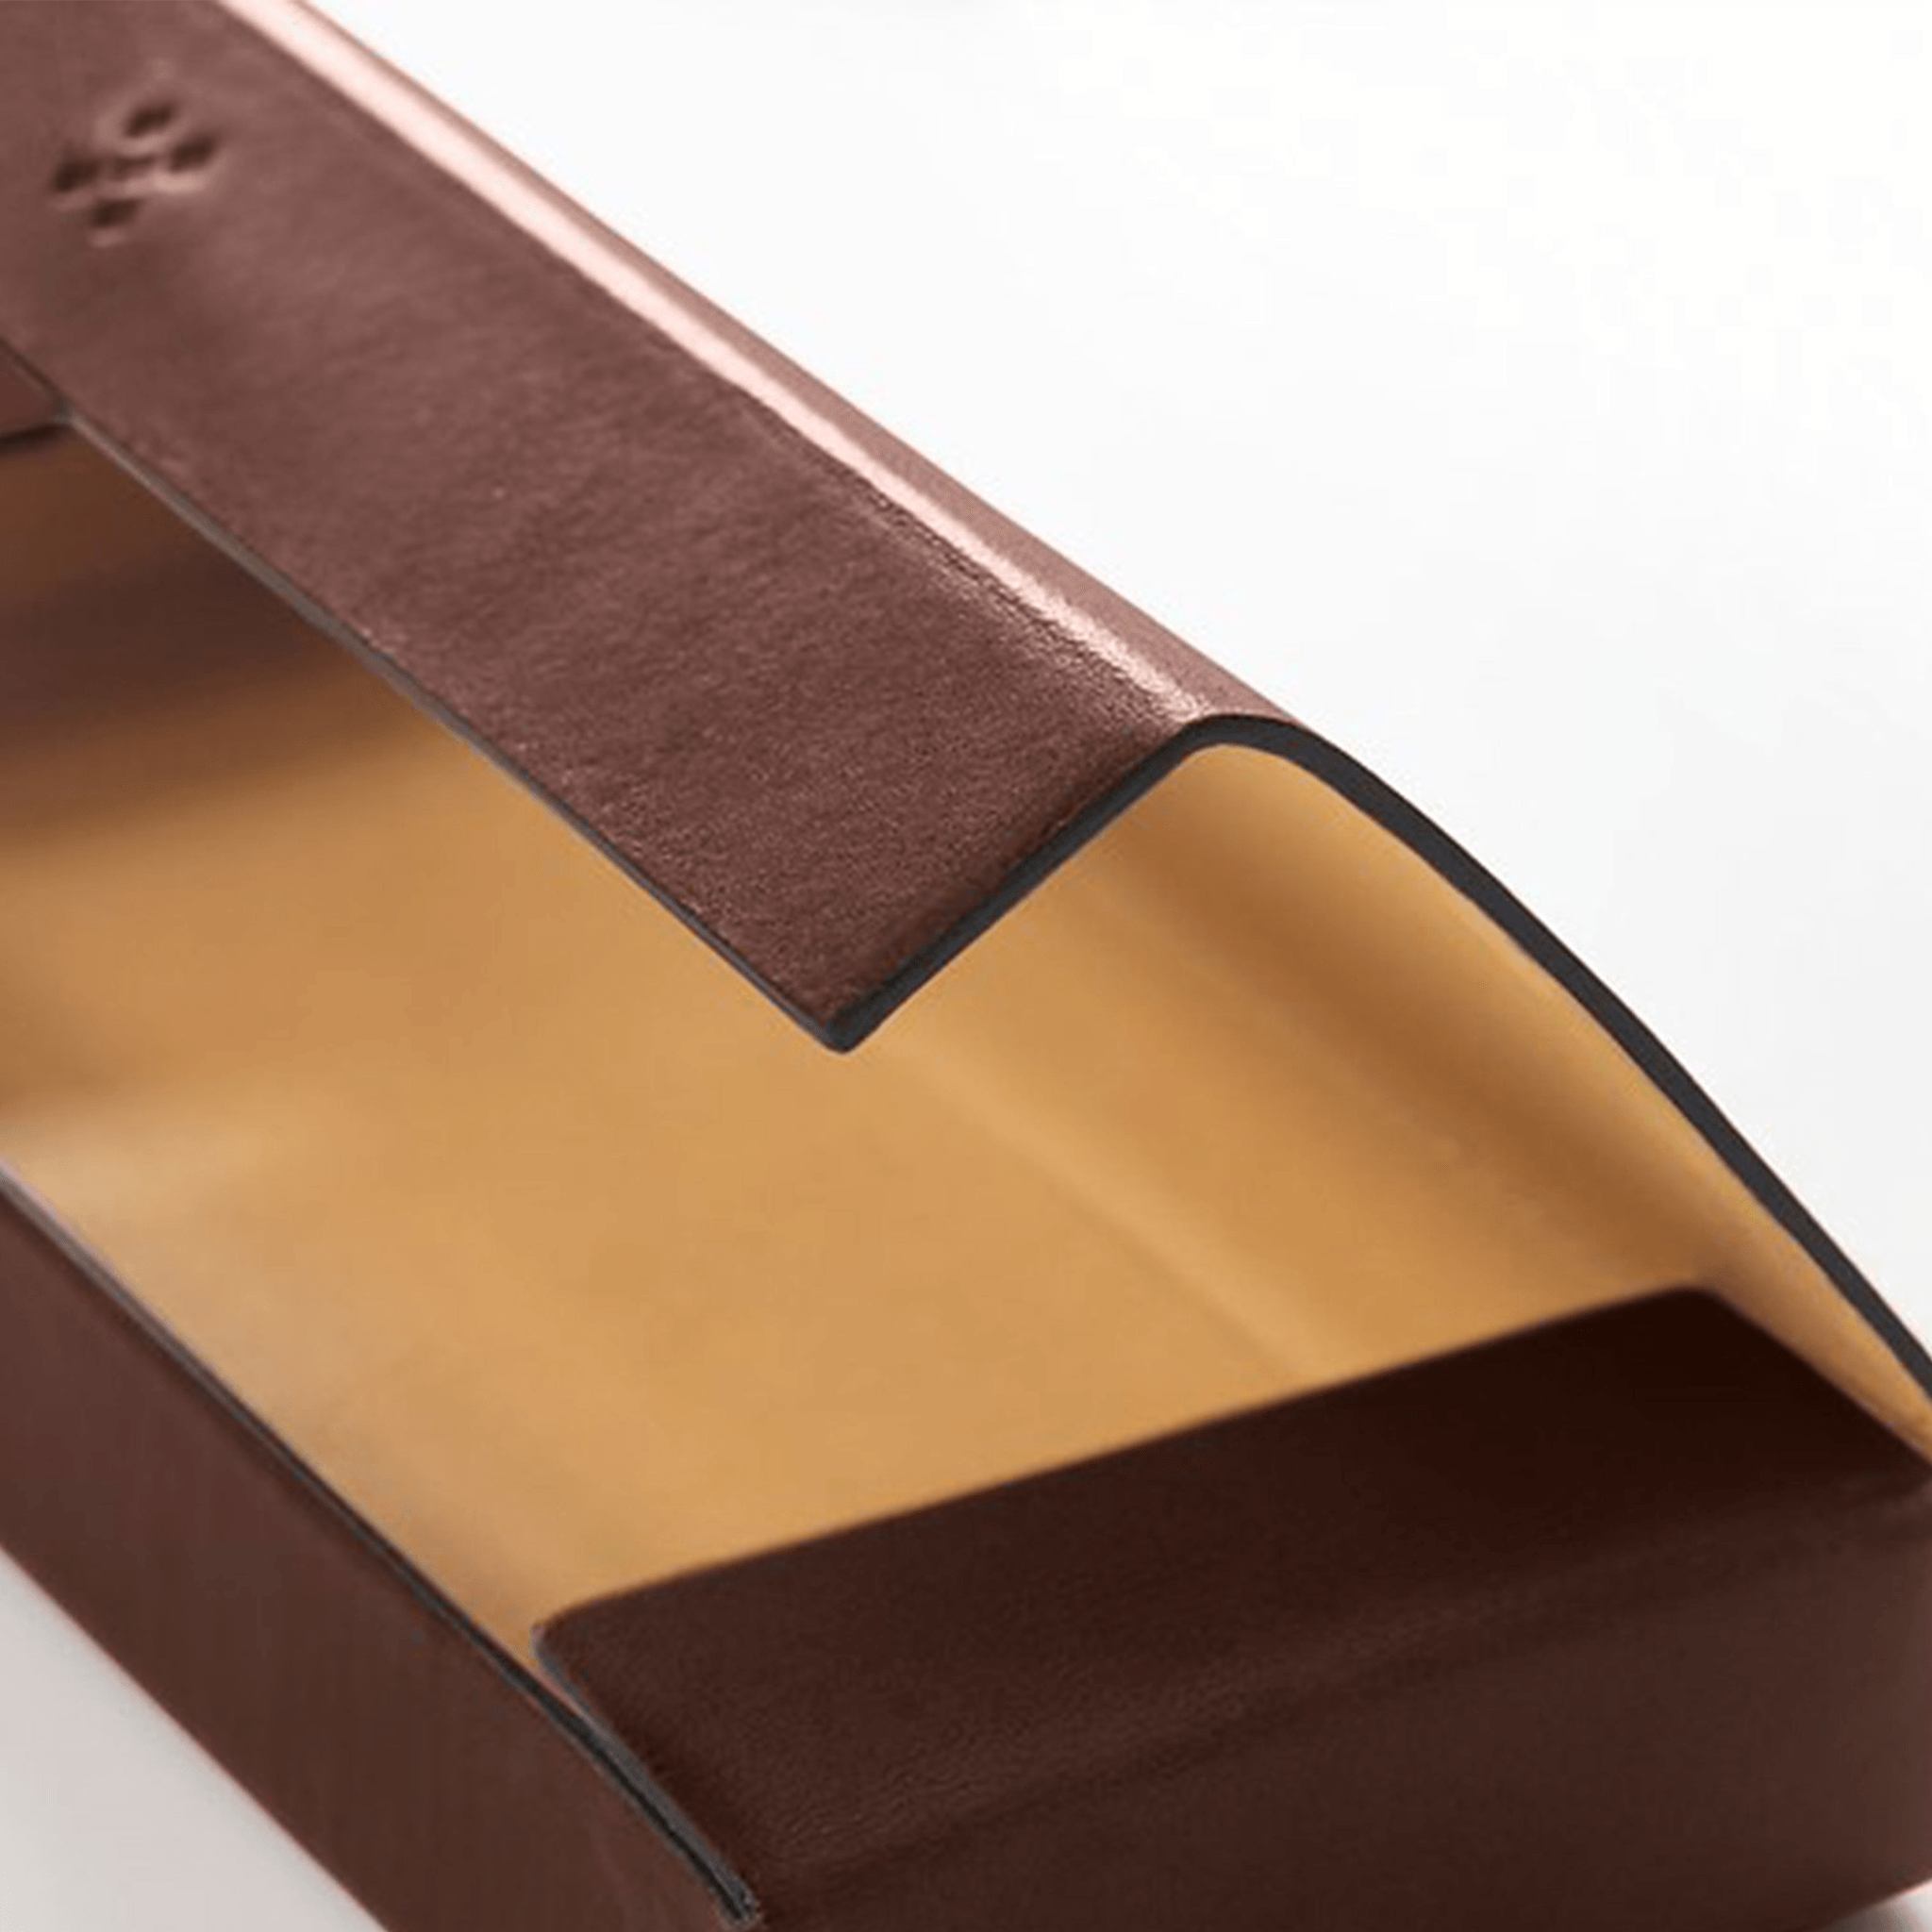 LGNDR ETWEE Leather Case Long - Laywine's